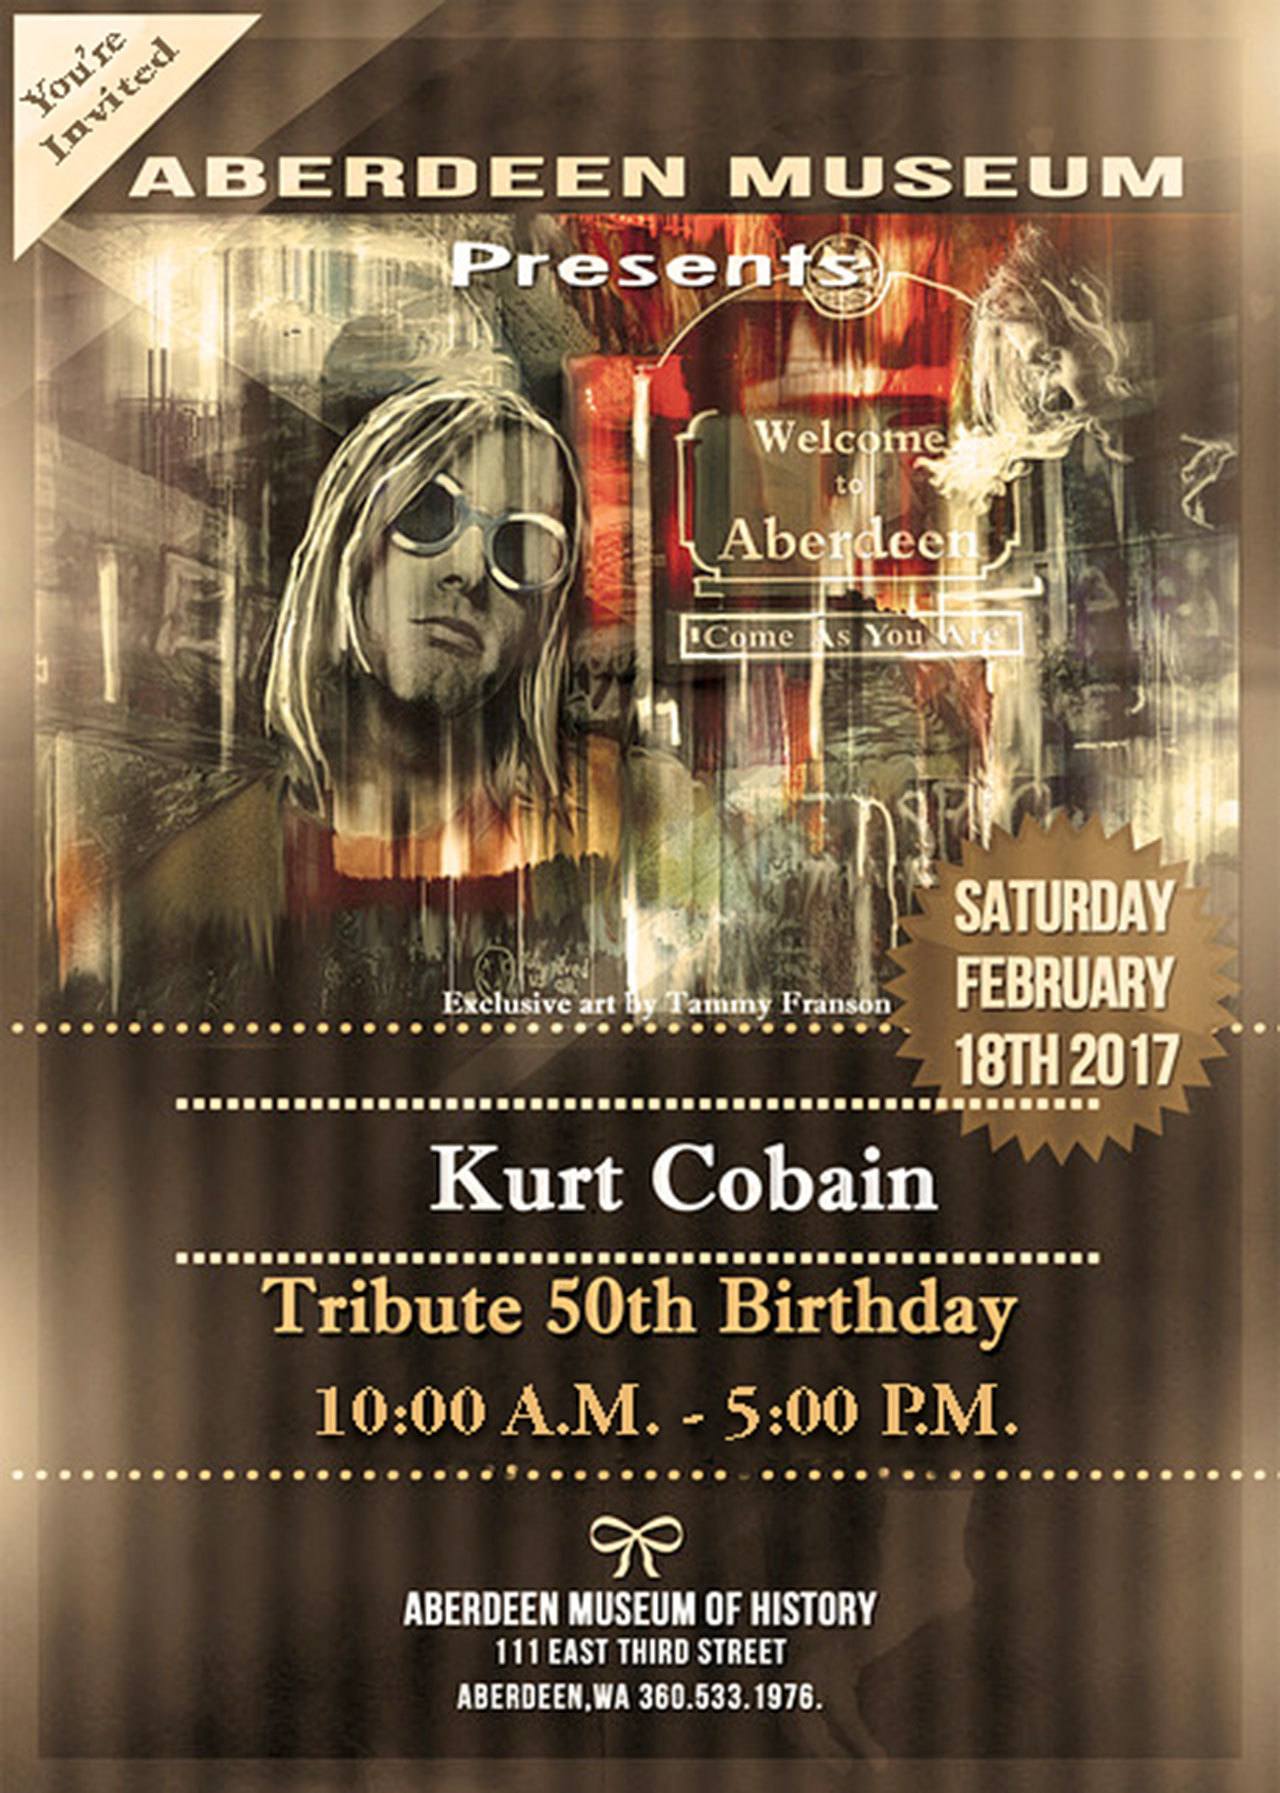 Aberdeen museum to host Kurt Cobain 50th birthday celebration